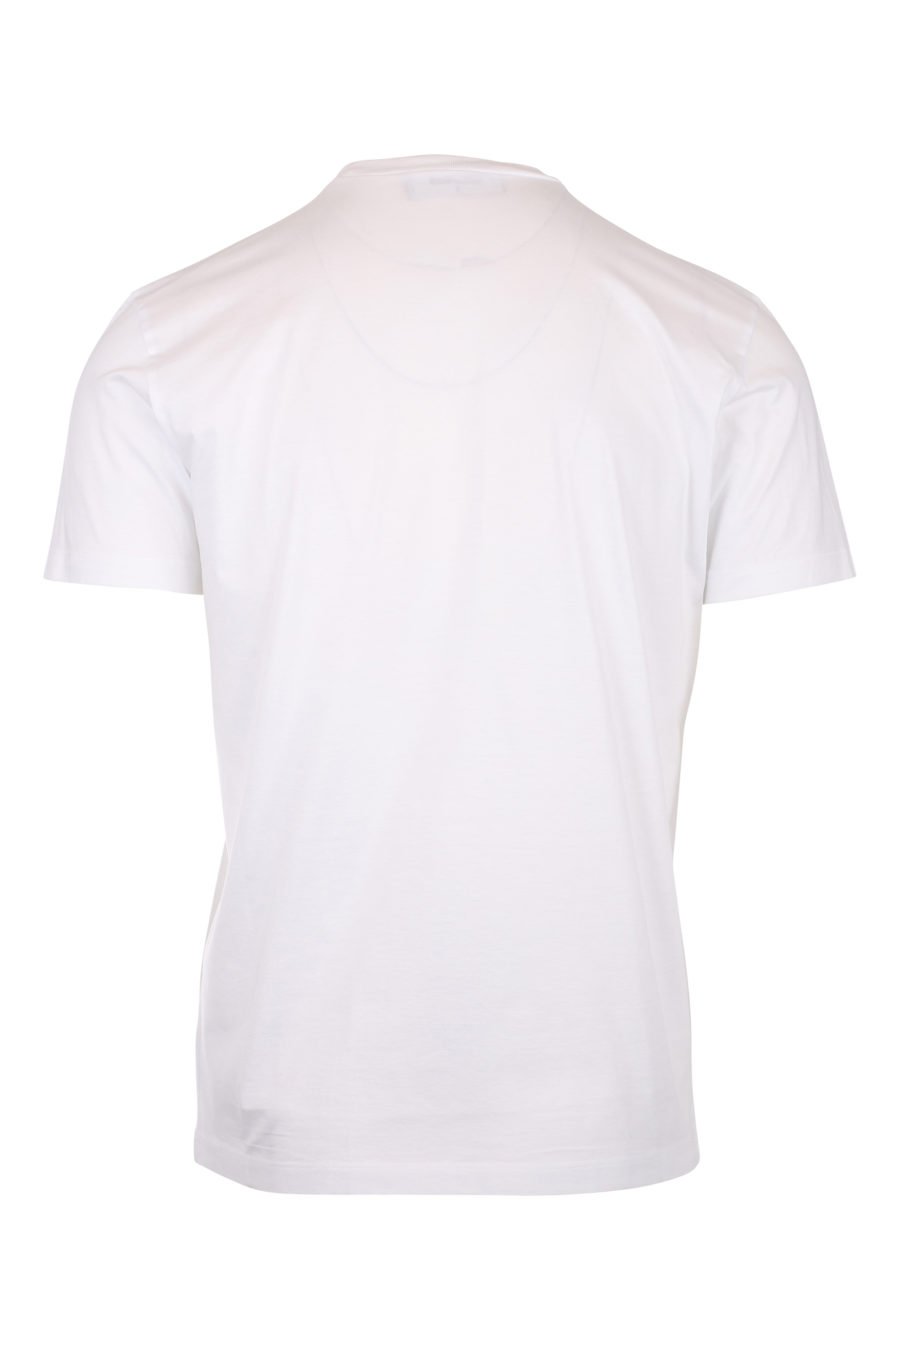 Camiseta blanca con logo ceresio 9 - IMG 9778